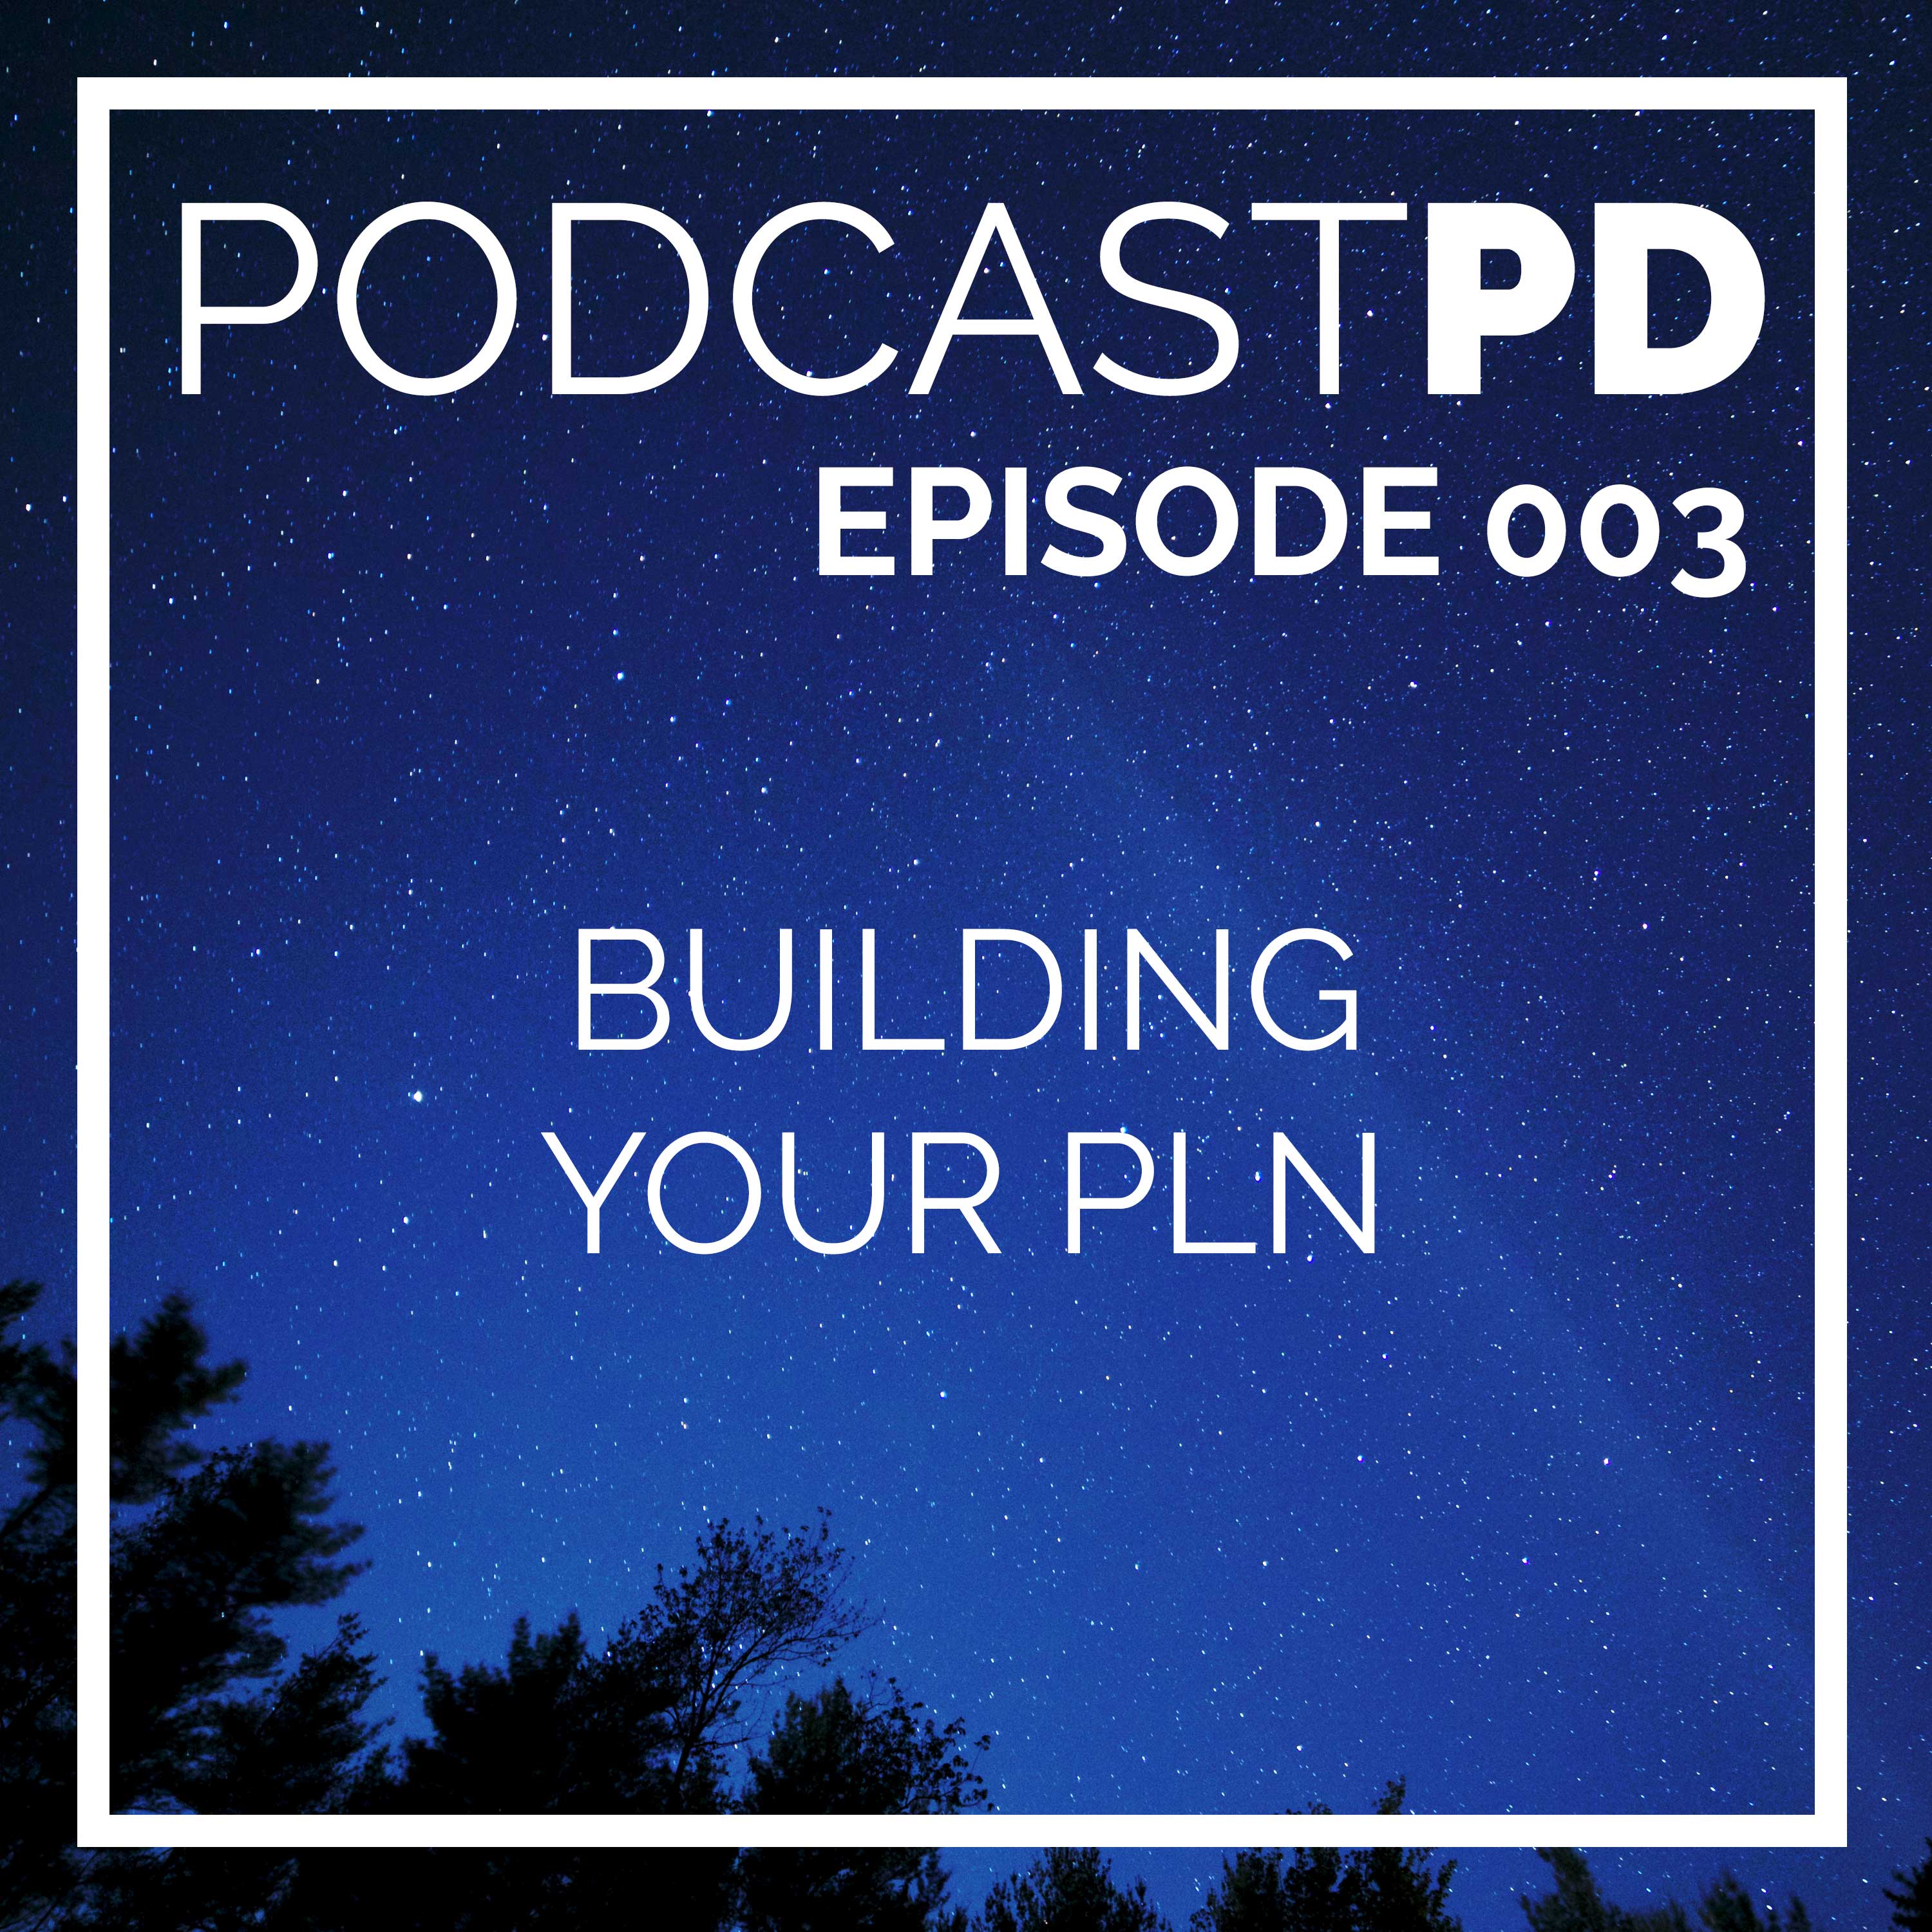 Building Your PLN - PPD003 Image